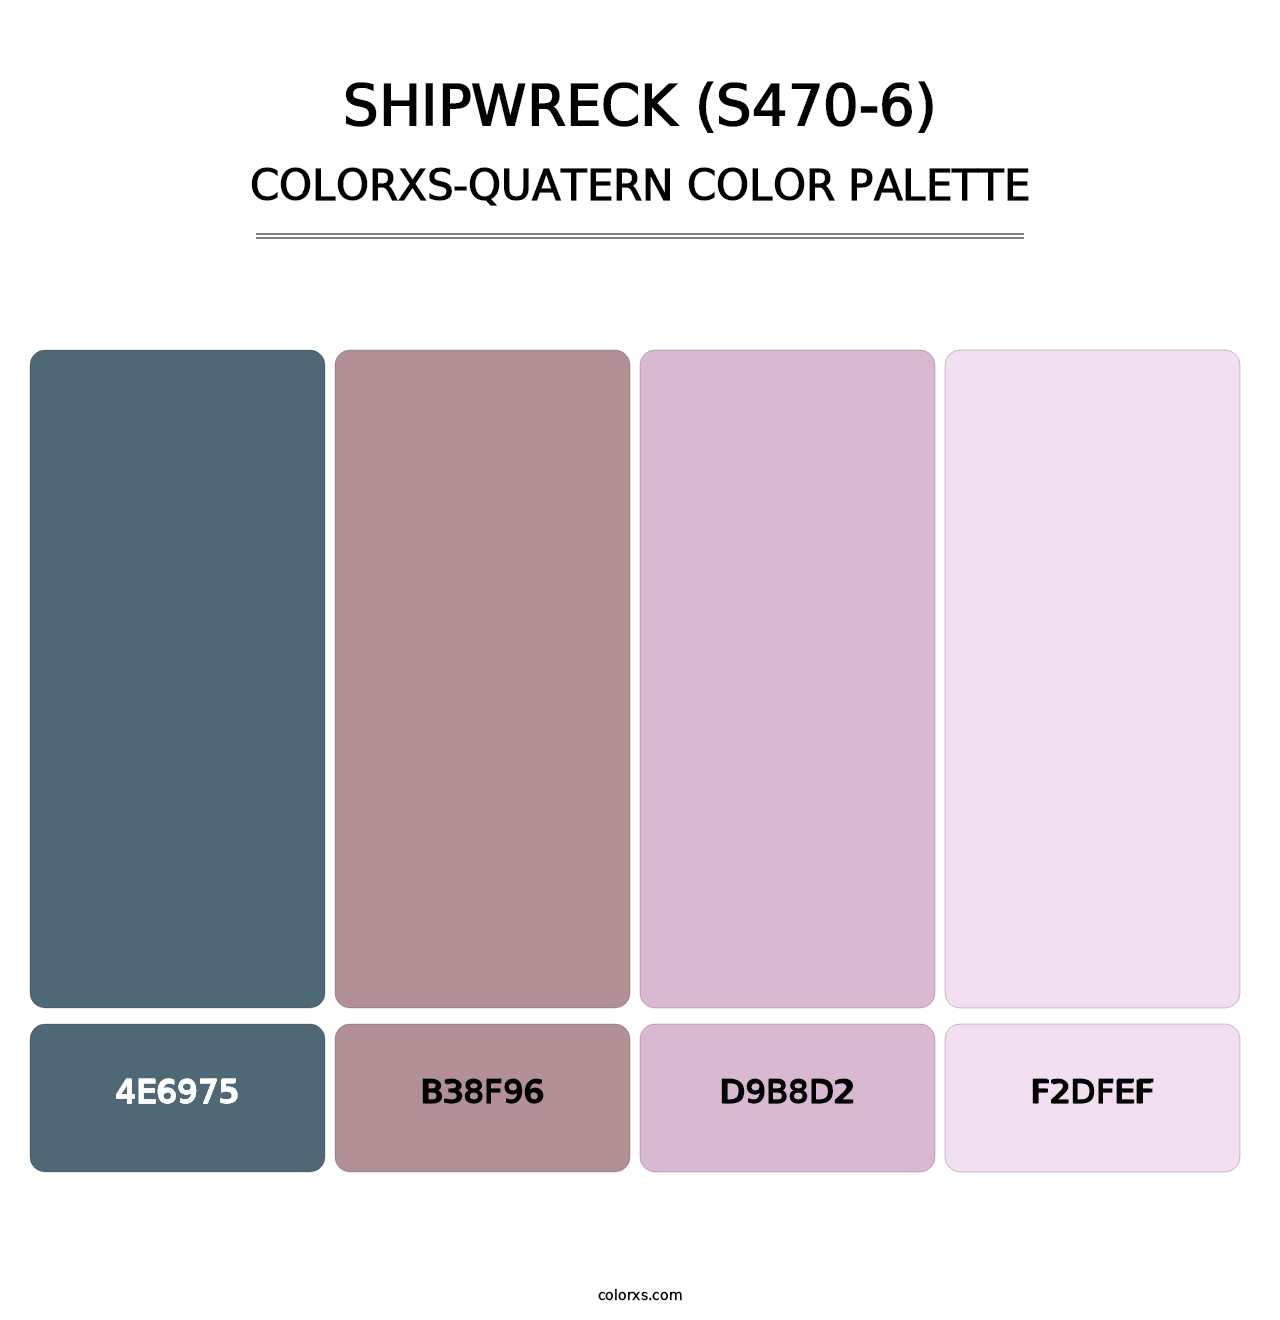 Shipwreck (S470-6) - Colorxs Quatern Palette